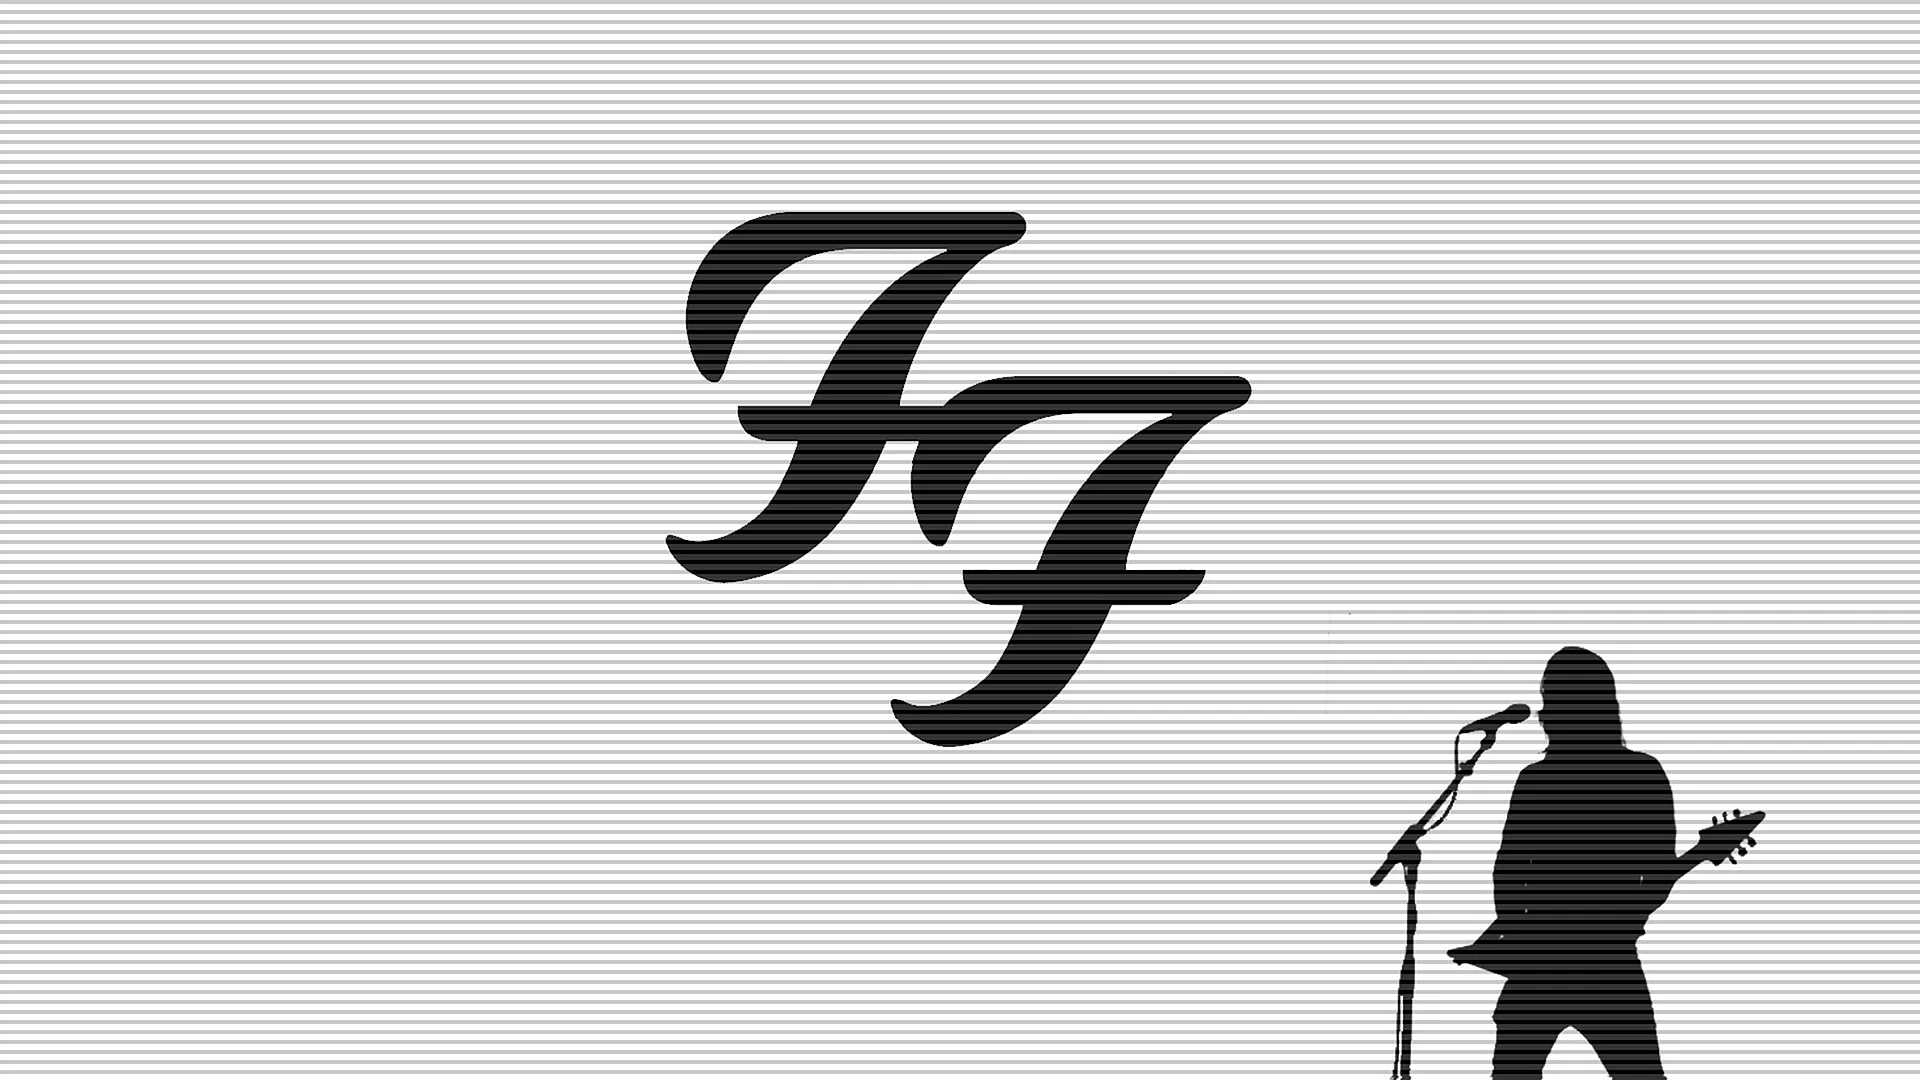 Foo Fighters Wallpaper